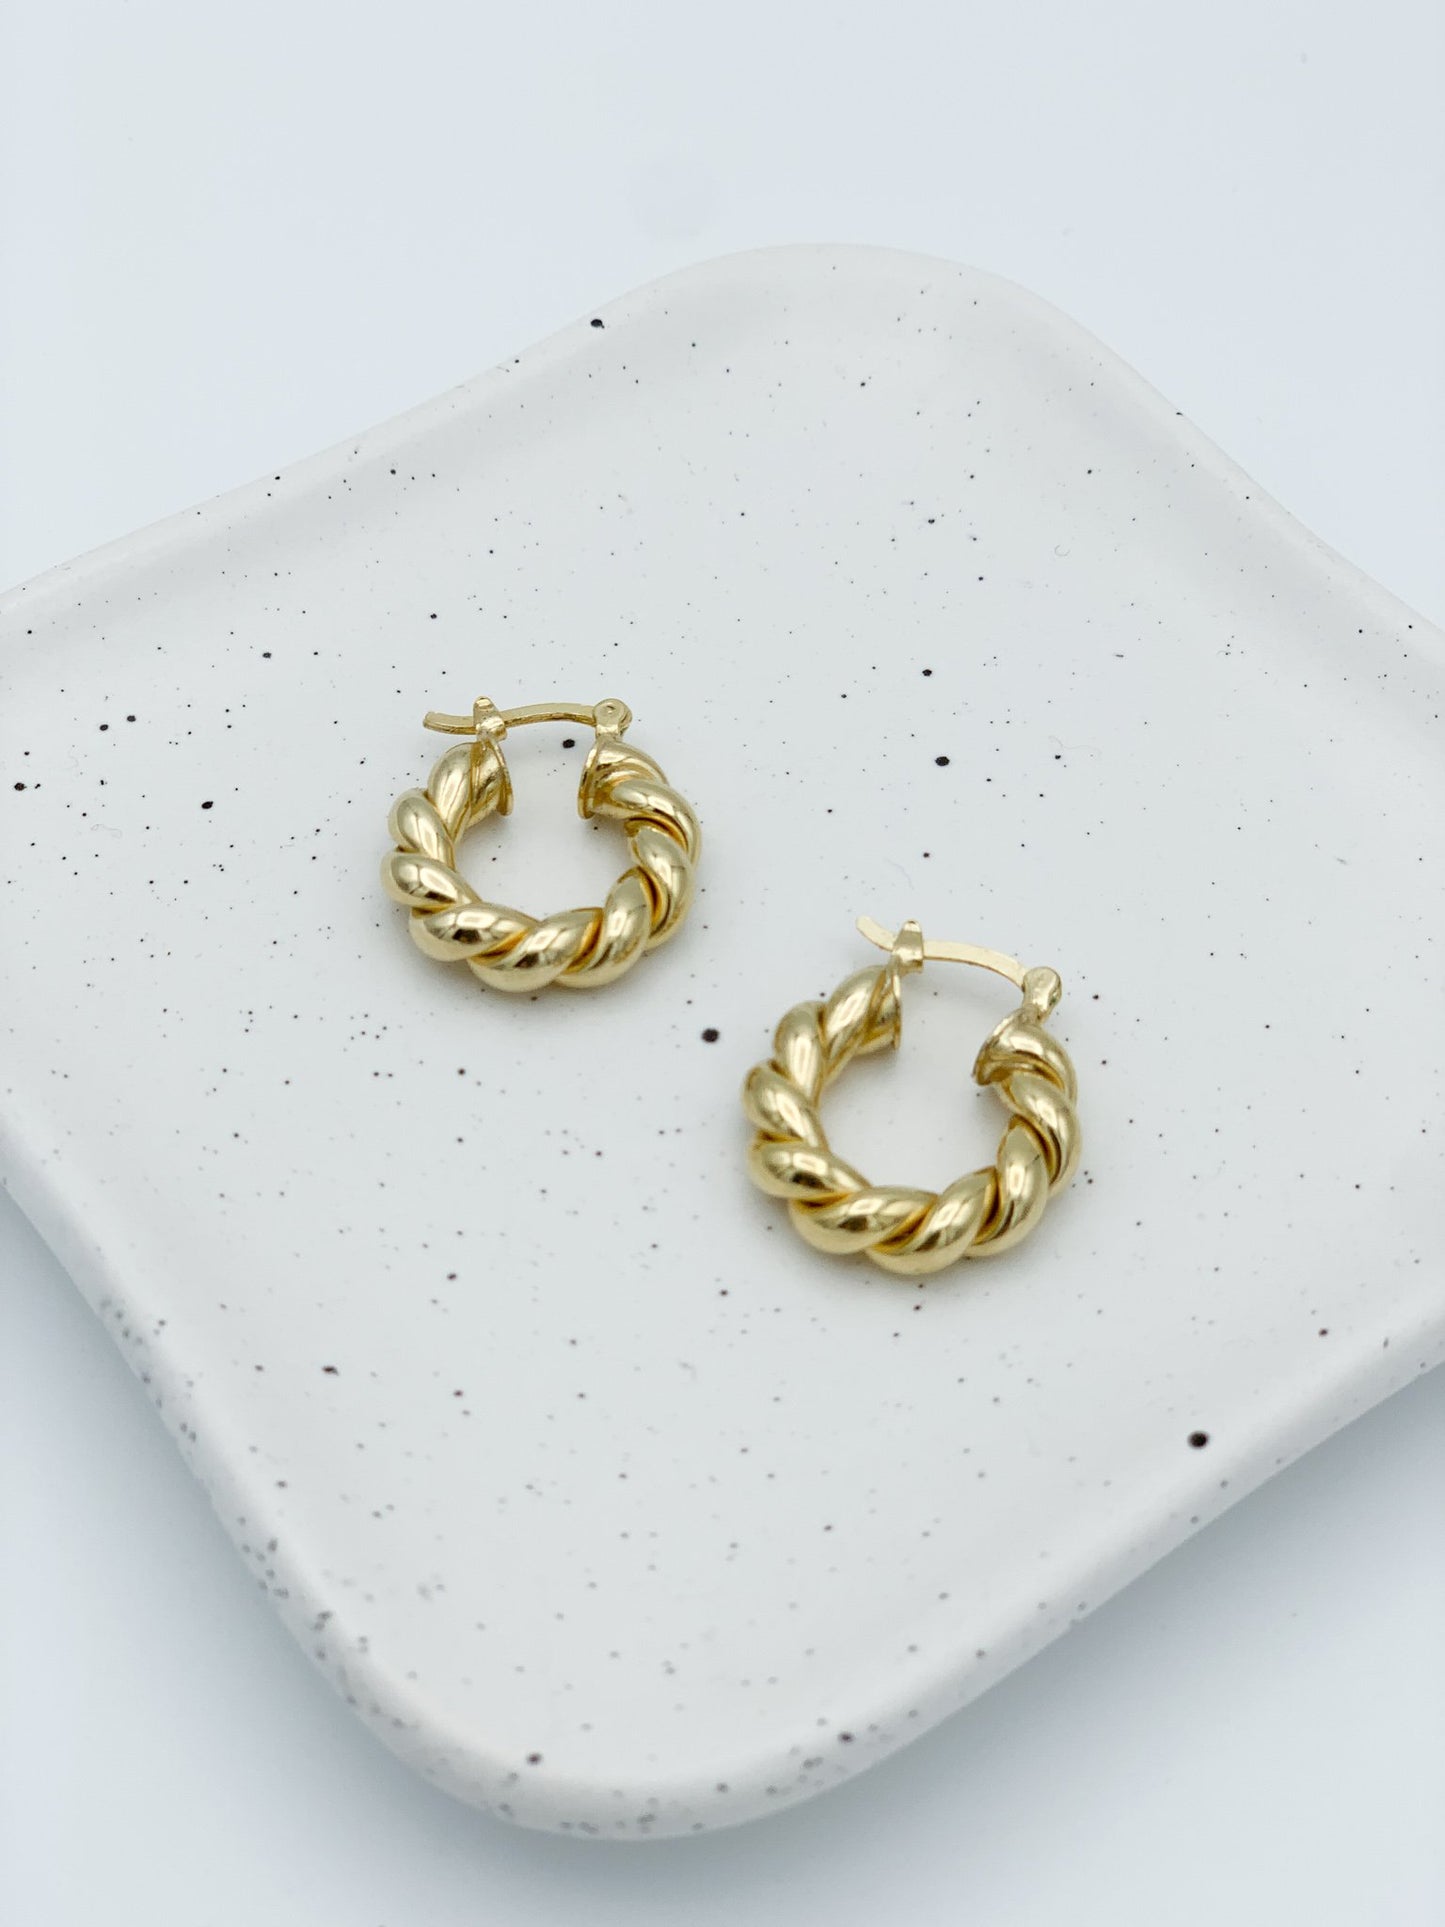 18k Gold Filled Twisted Tube Hoop Earrings